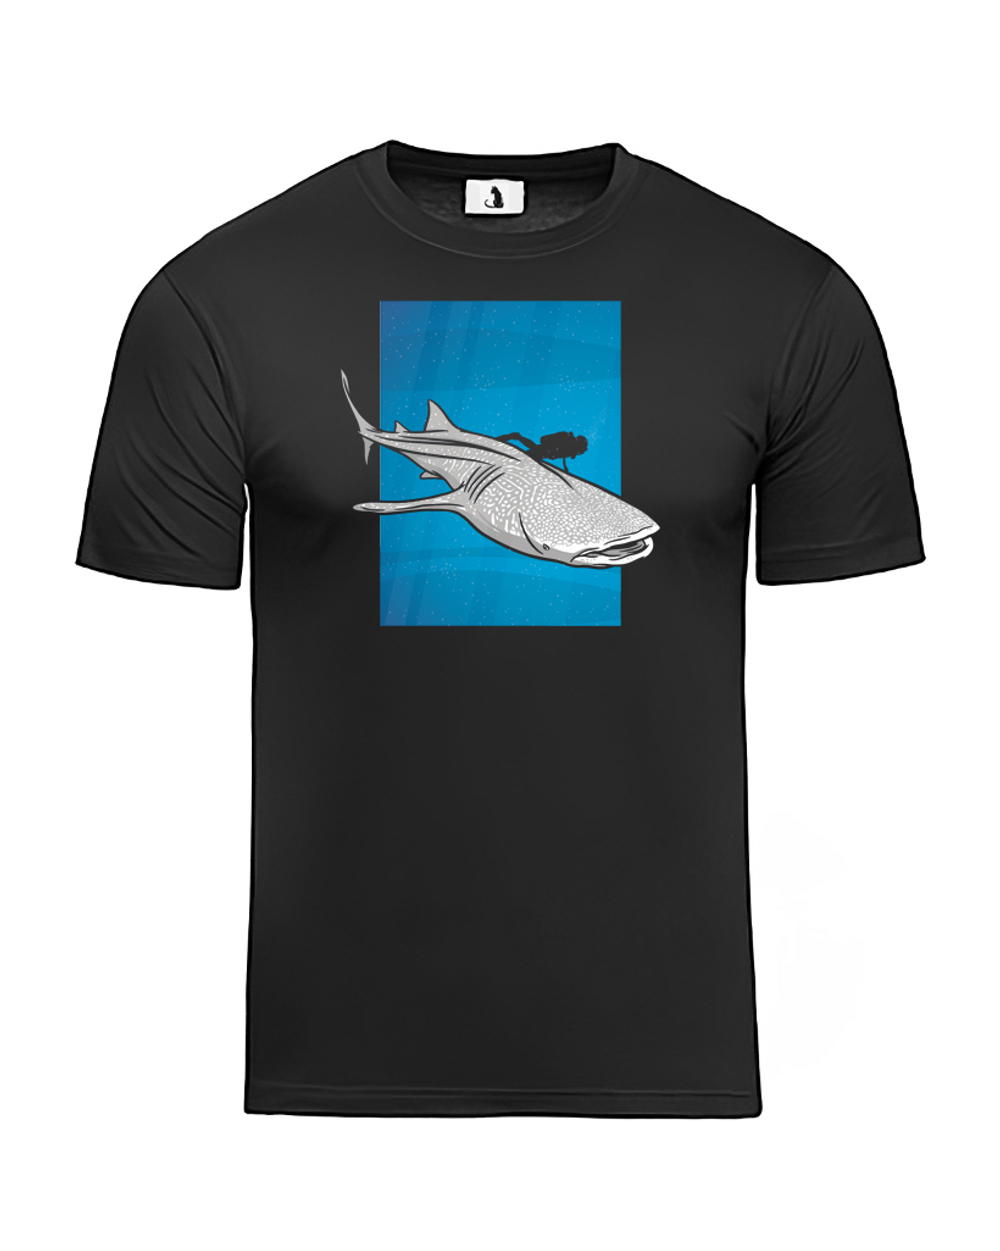 Футболка Китовая акула мужская черная